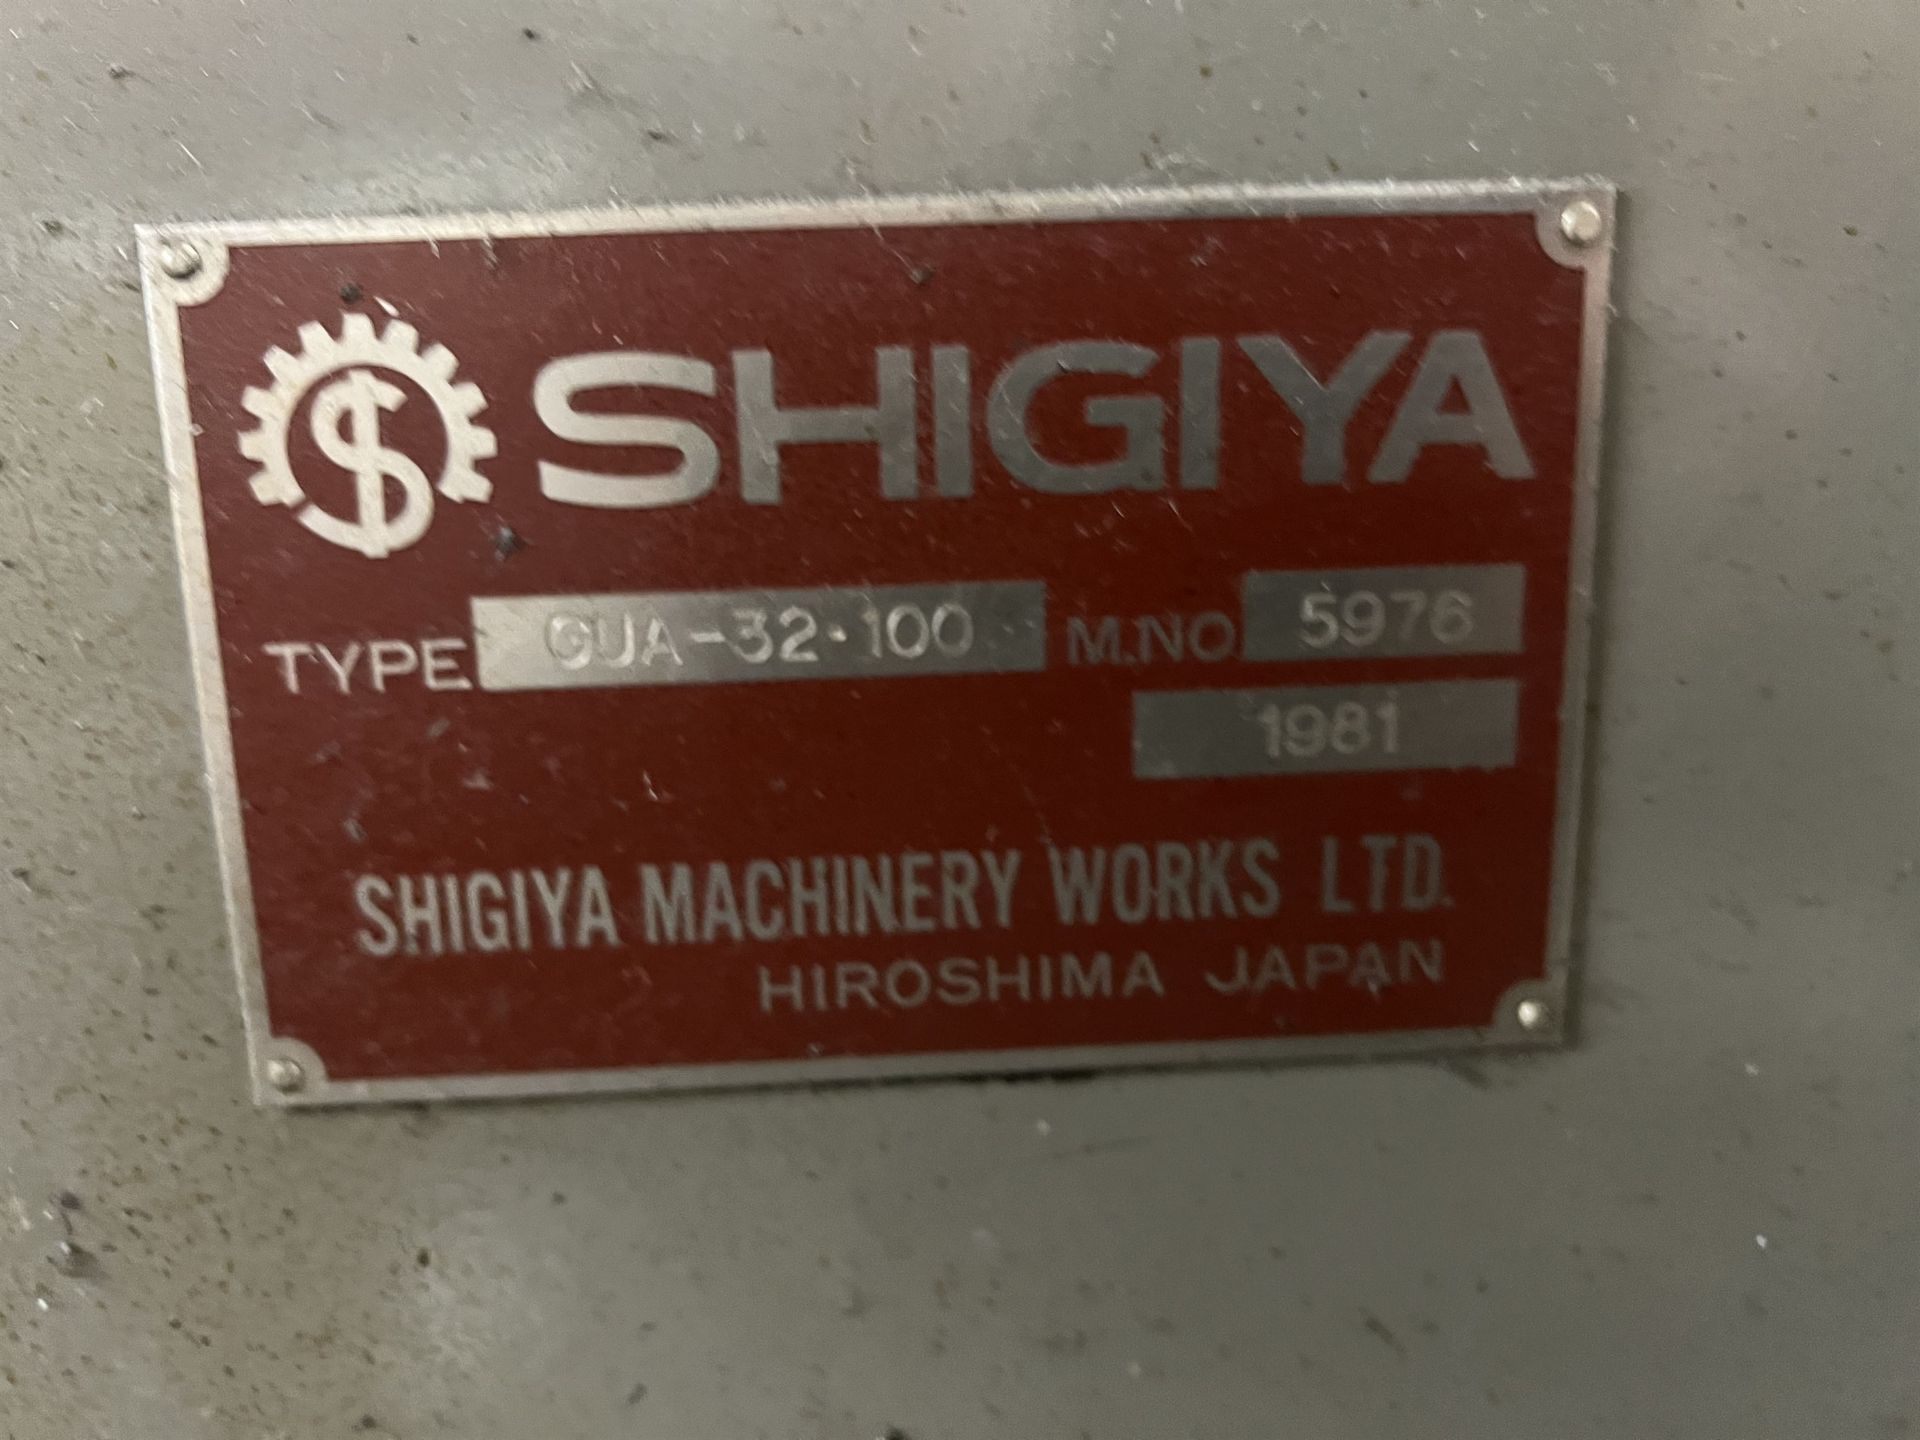 SHIGIYA SEIKI GUA-32-100 Universal Cylindrical Grinder, s/n 5976, 14" Max Wheel Dia, 2" Max Wheel - Image 11 of 11